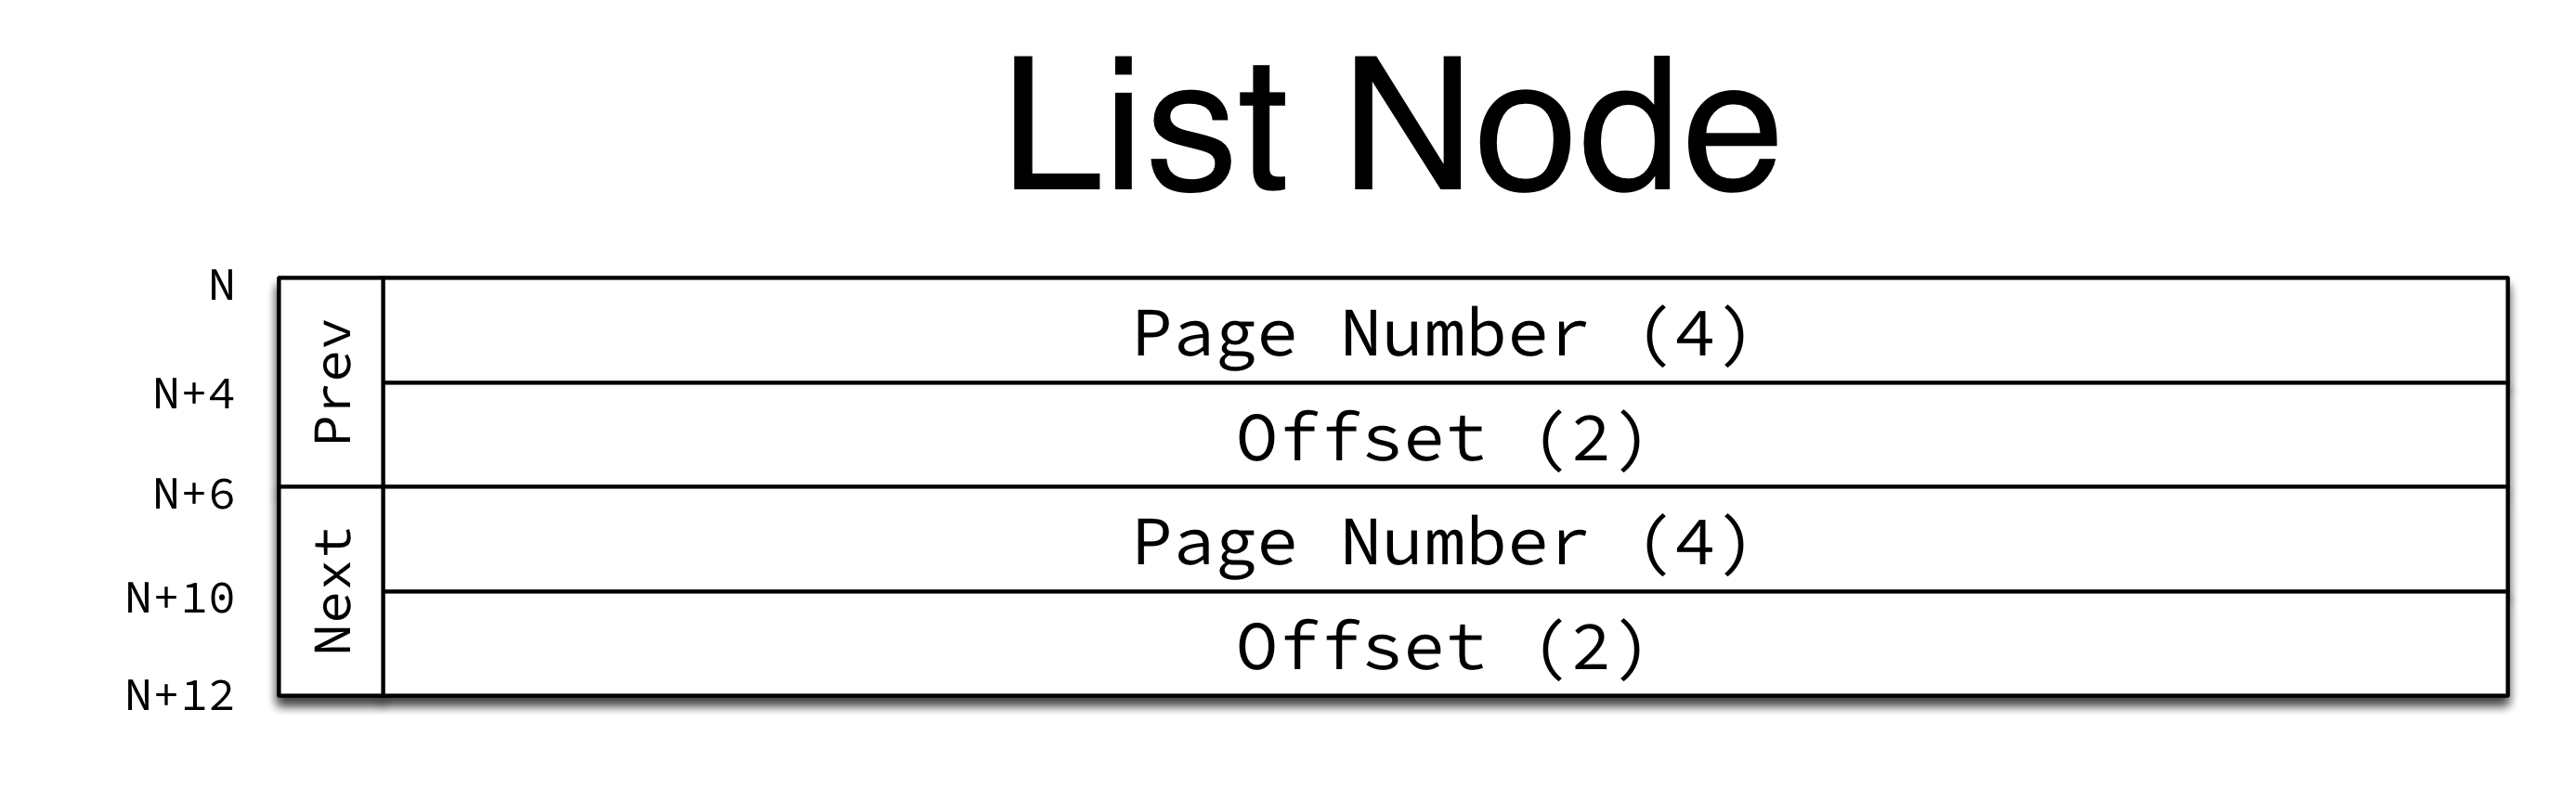 List Nodes